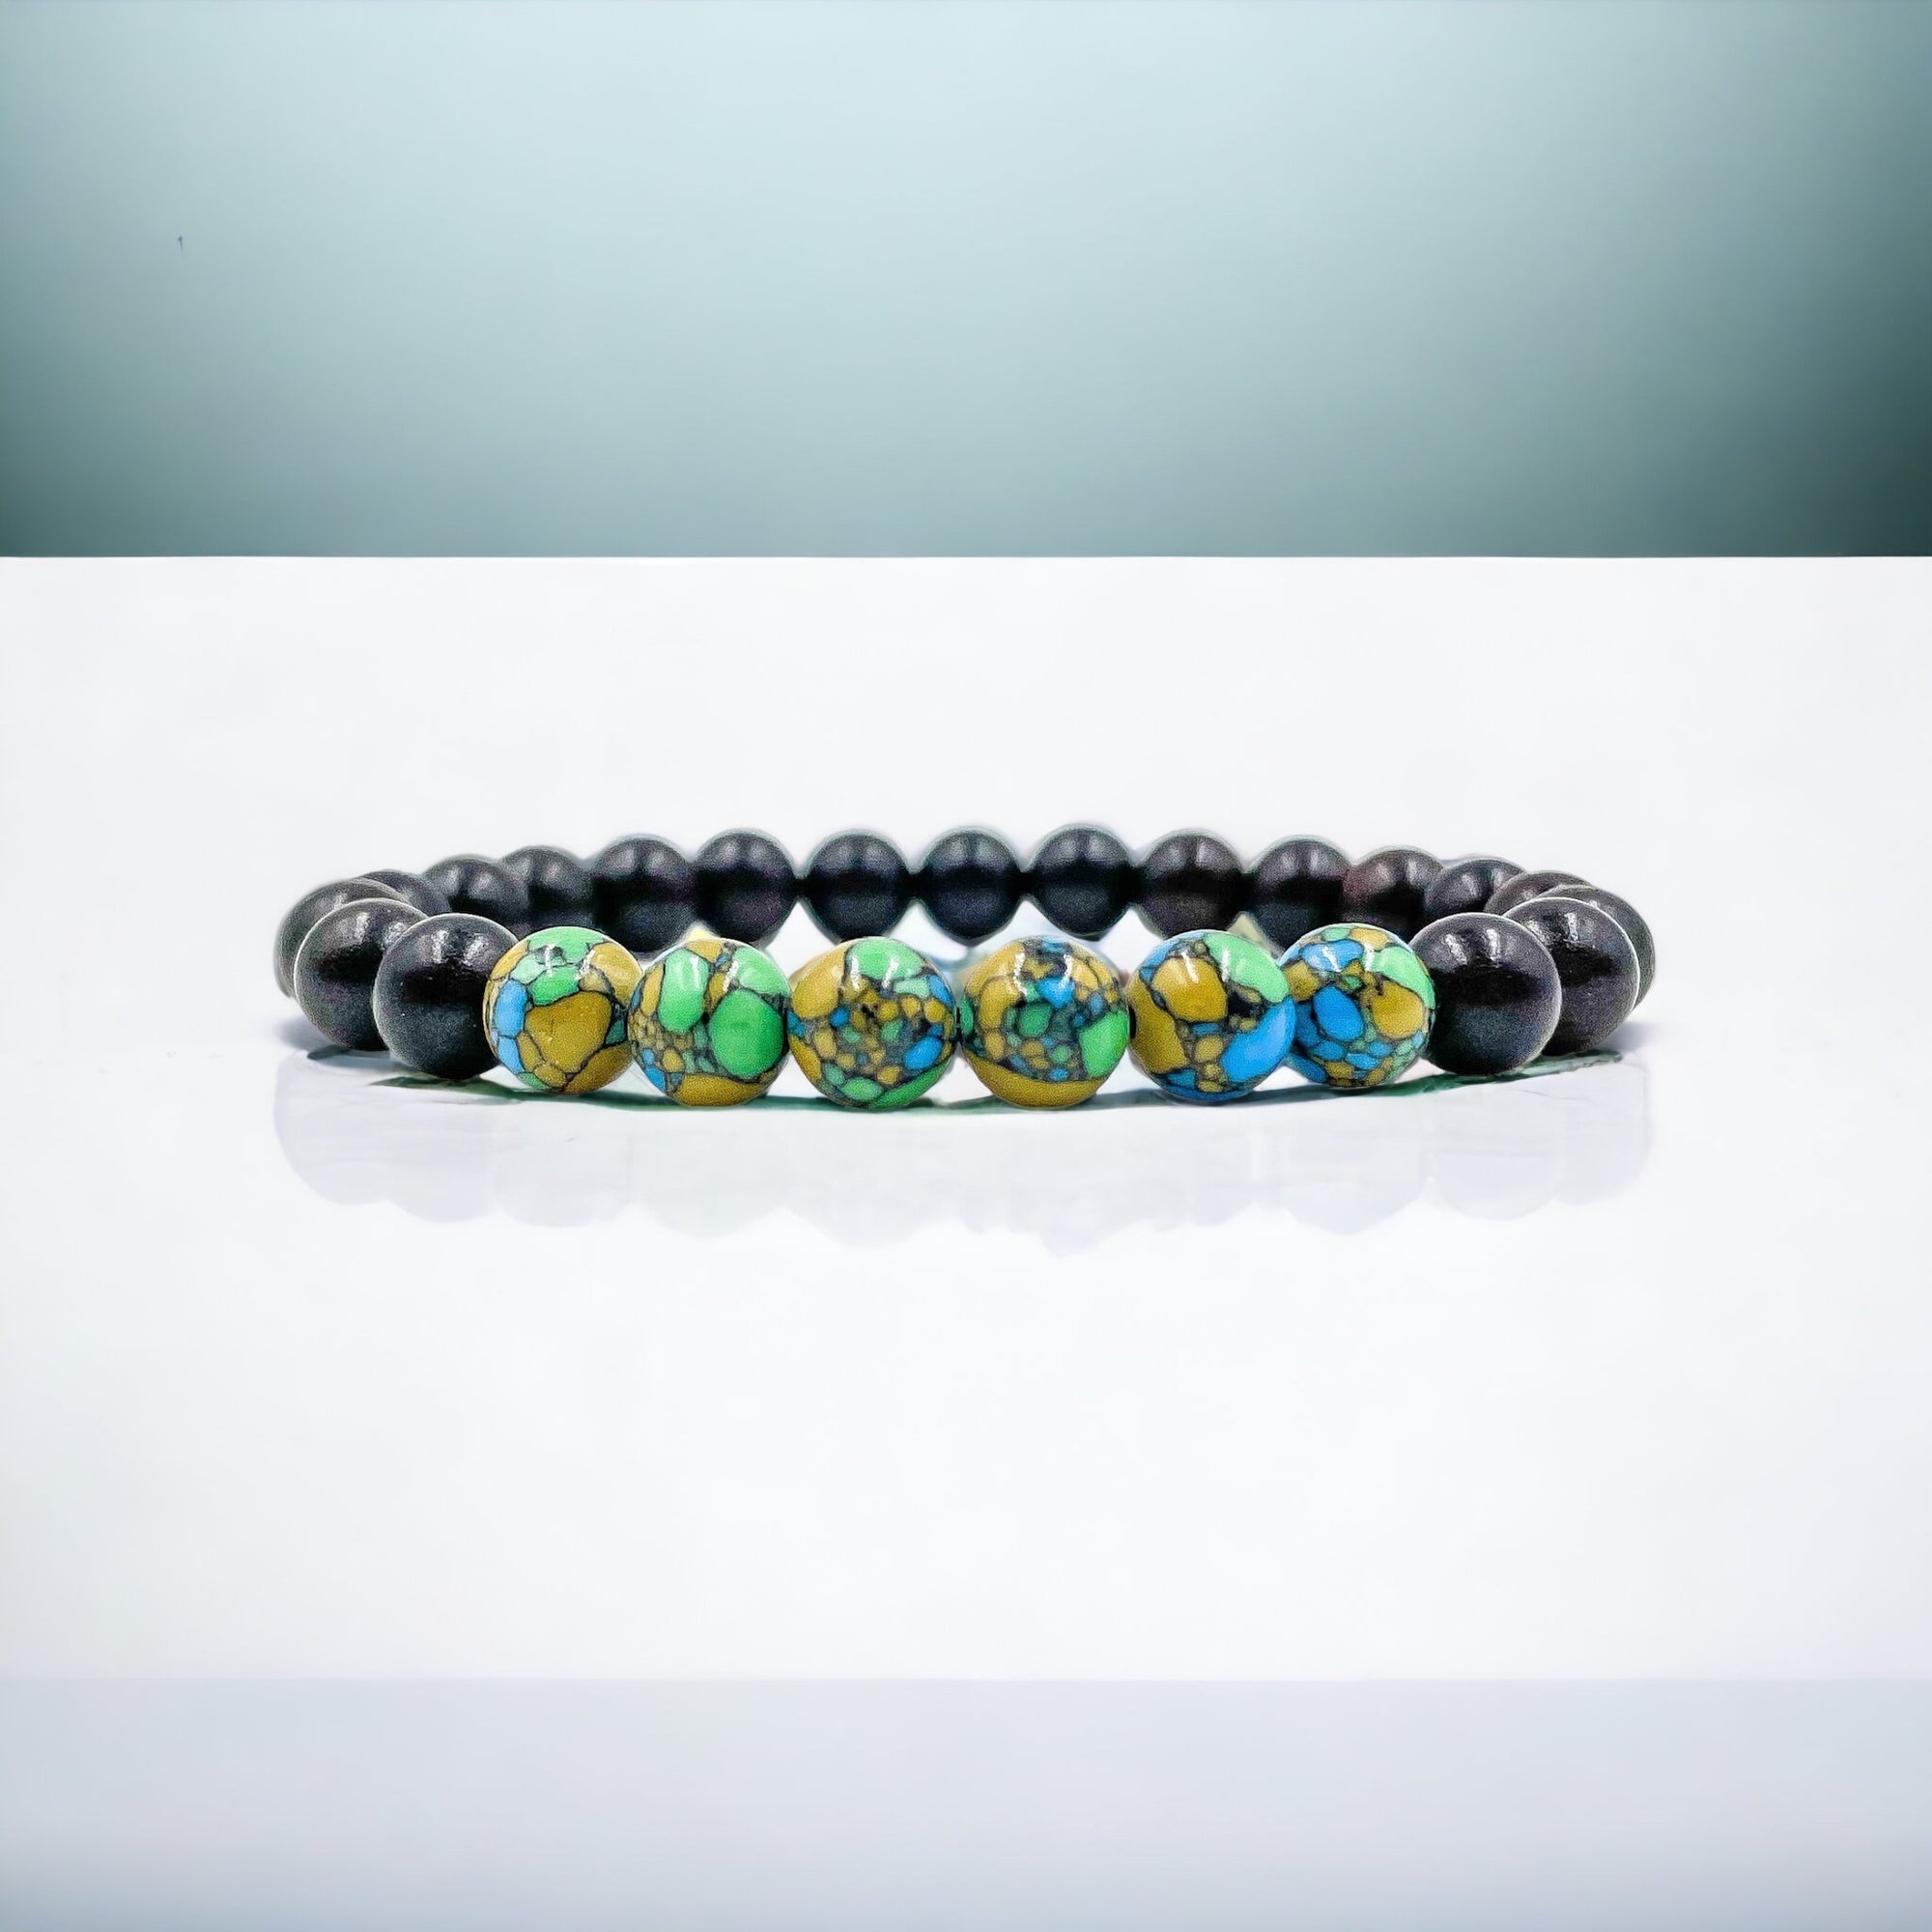 Grove - Multicolor Howlite & Blackwood Mala Beaded Bracelet